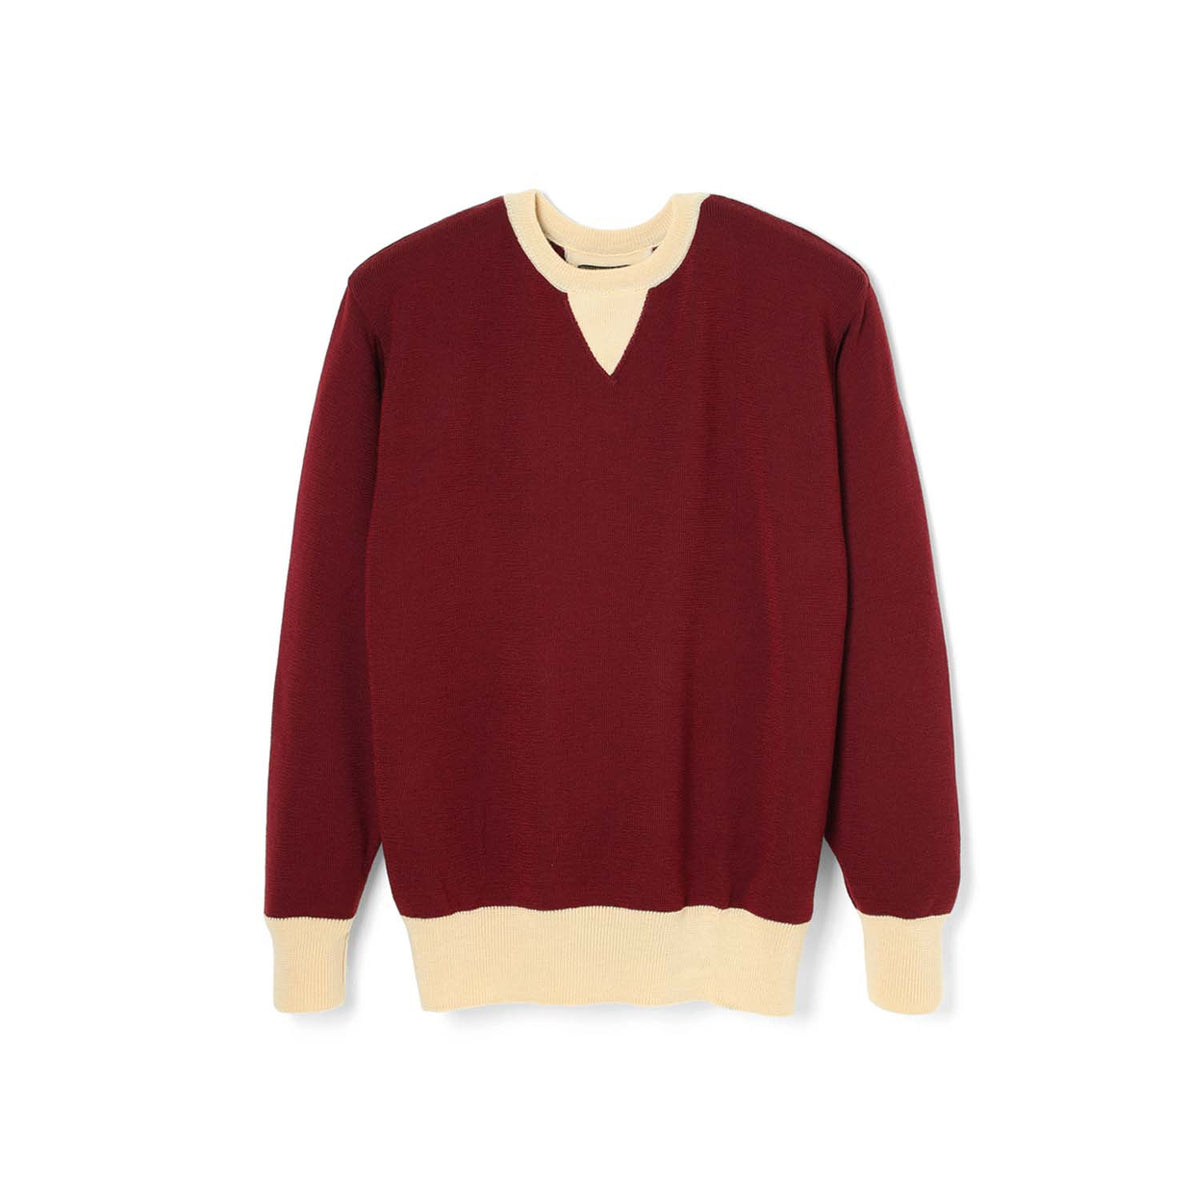 Stevenson Overall Co. V-Gusset Wool Knitted Sweat Shirt Burgundy FINAL SALE